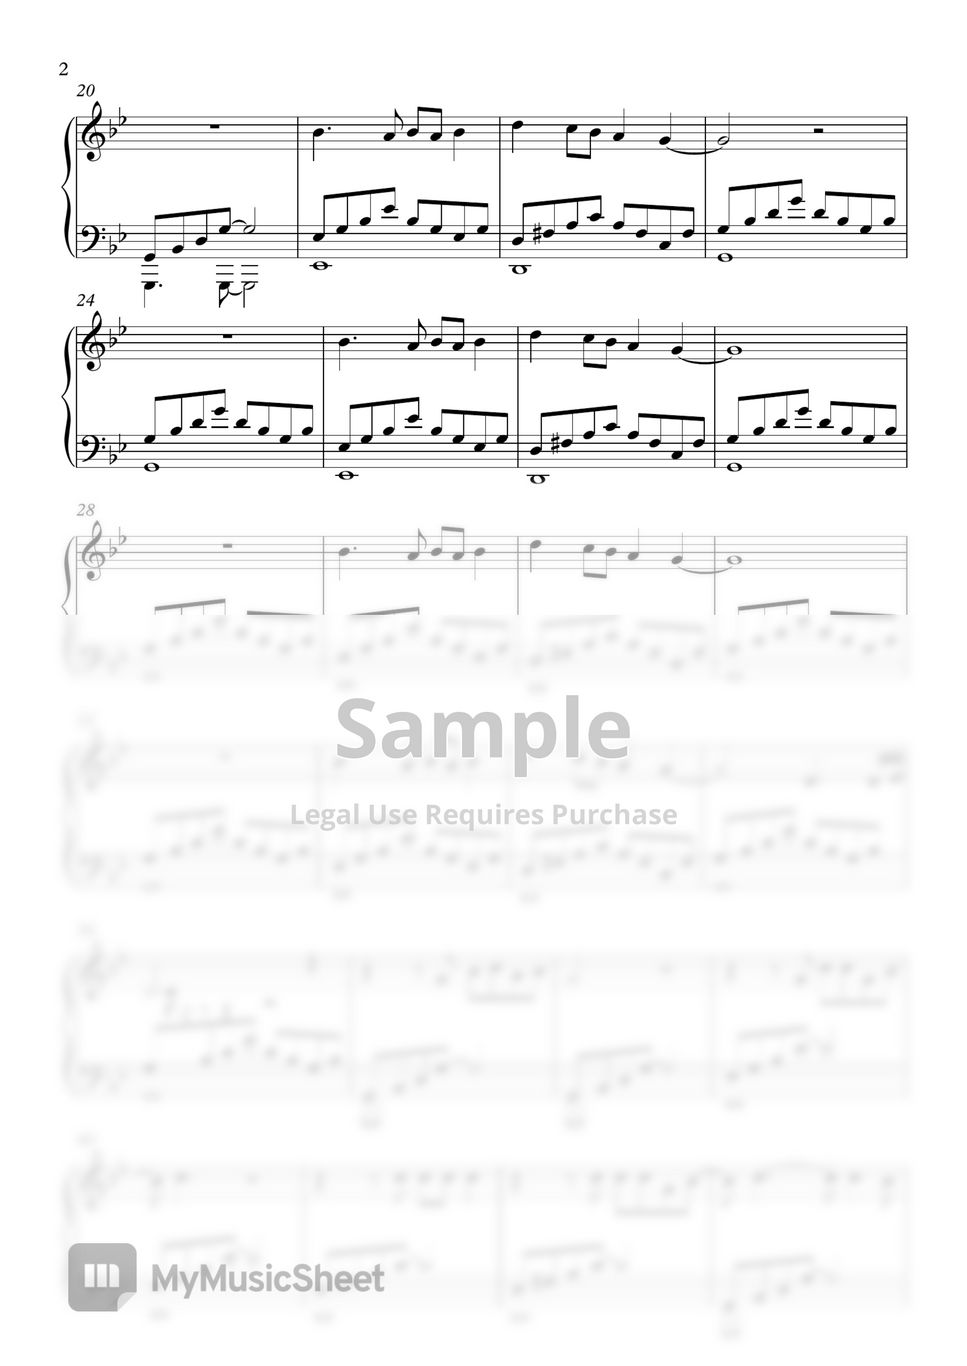 Jamala - Jamala 1944 piano by Michael Piano Notes by Michael TERESHENKO